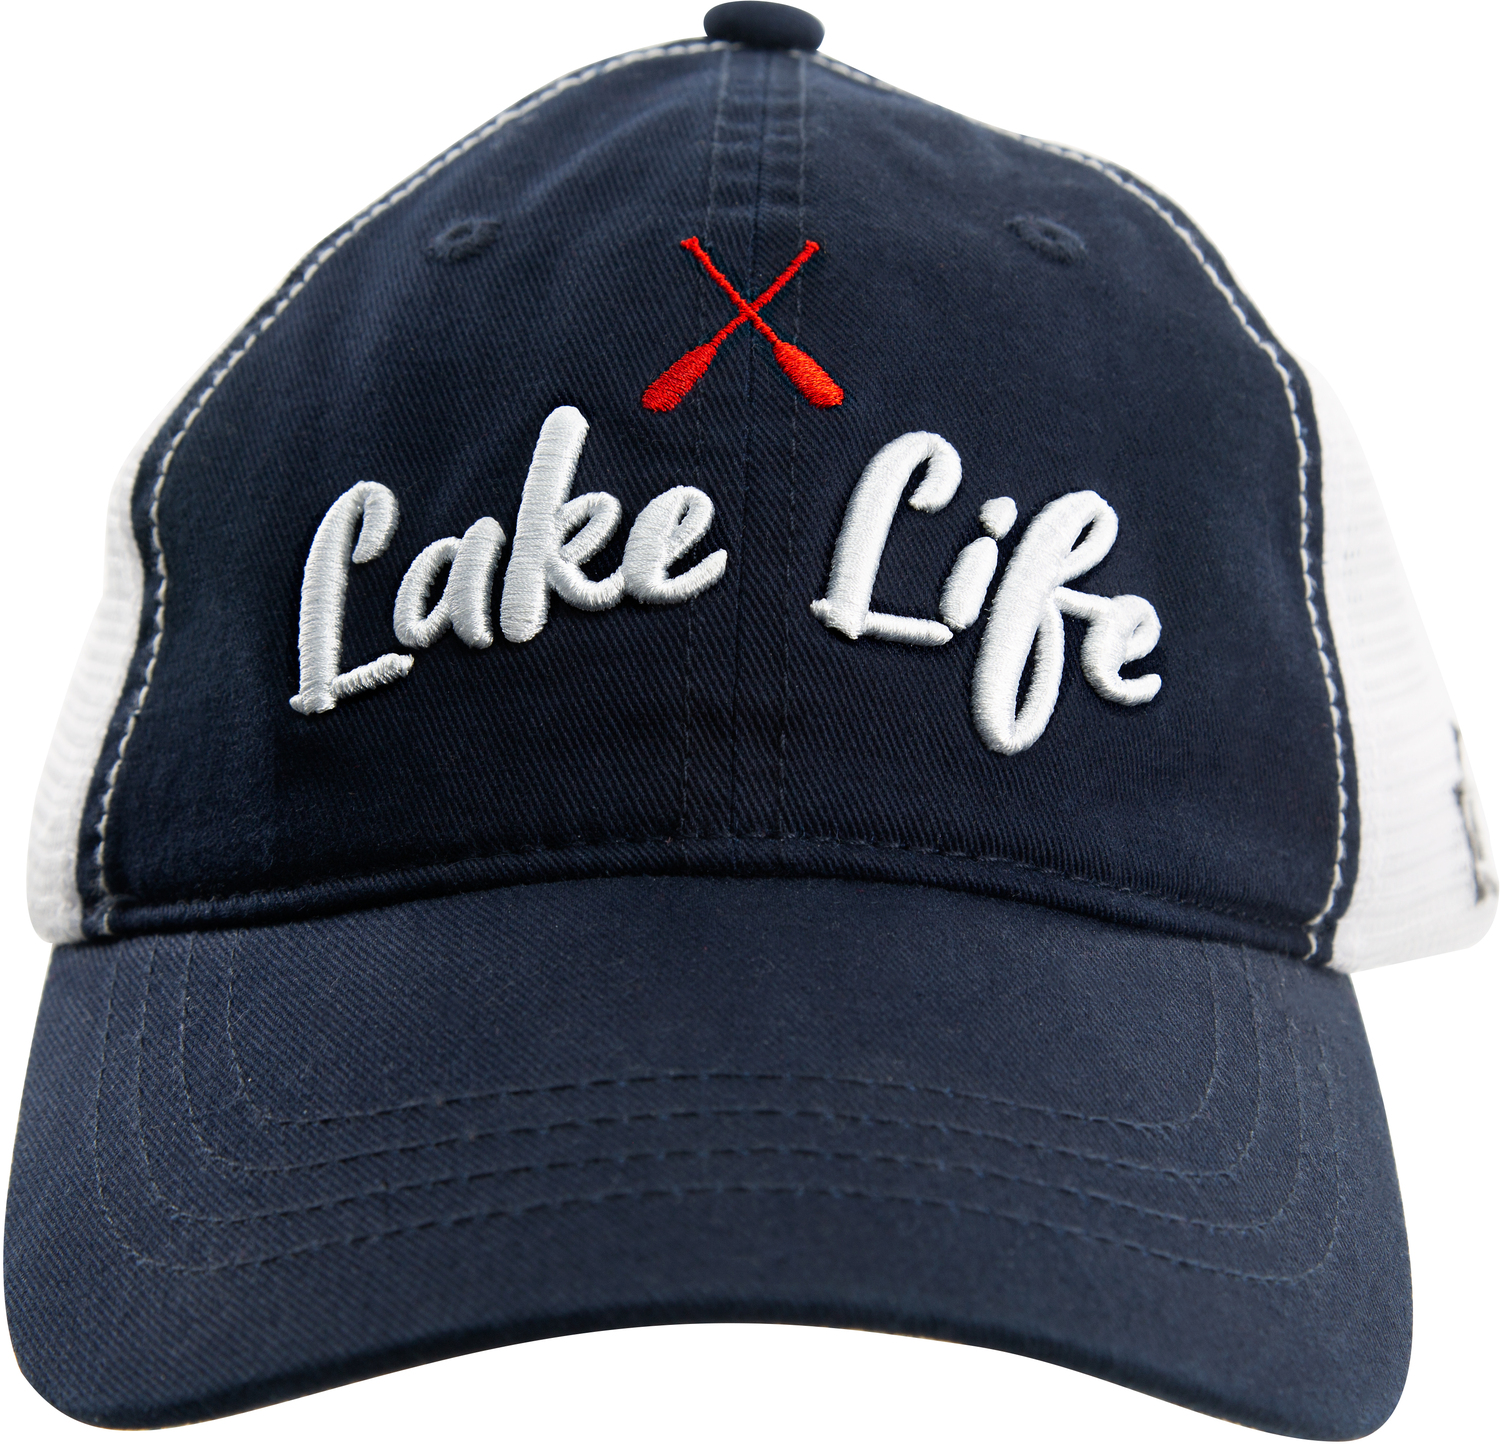 Lake by We People - Lake - Blue Adjustable Mesh Hat